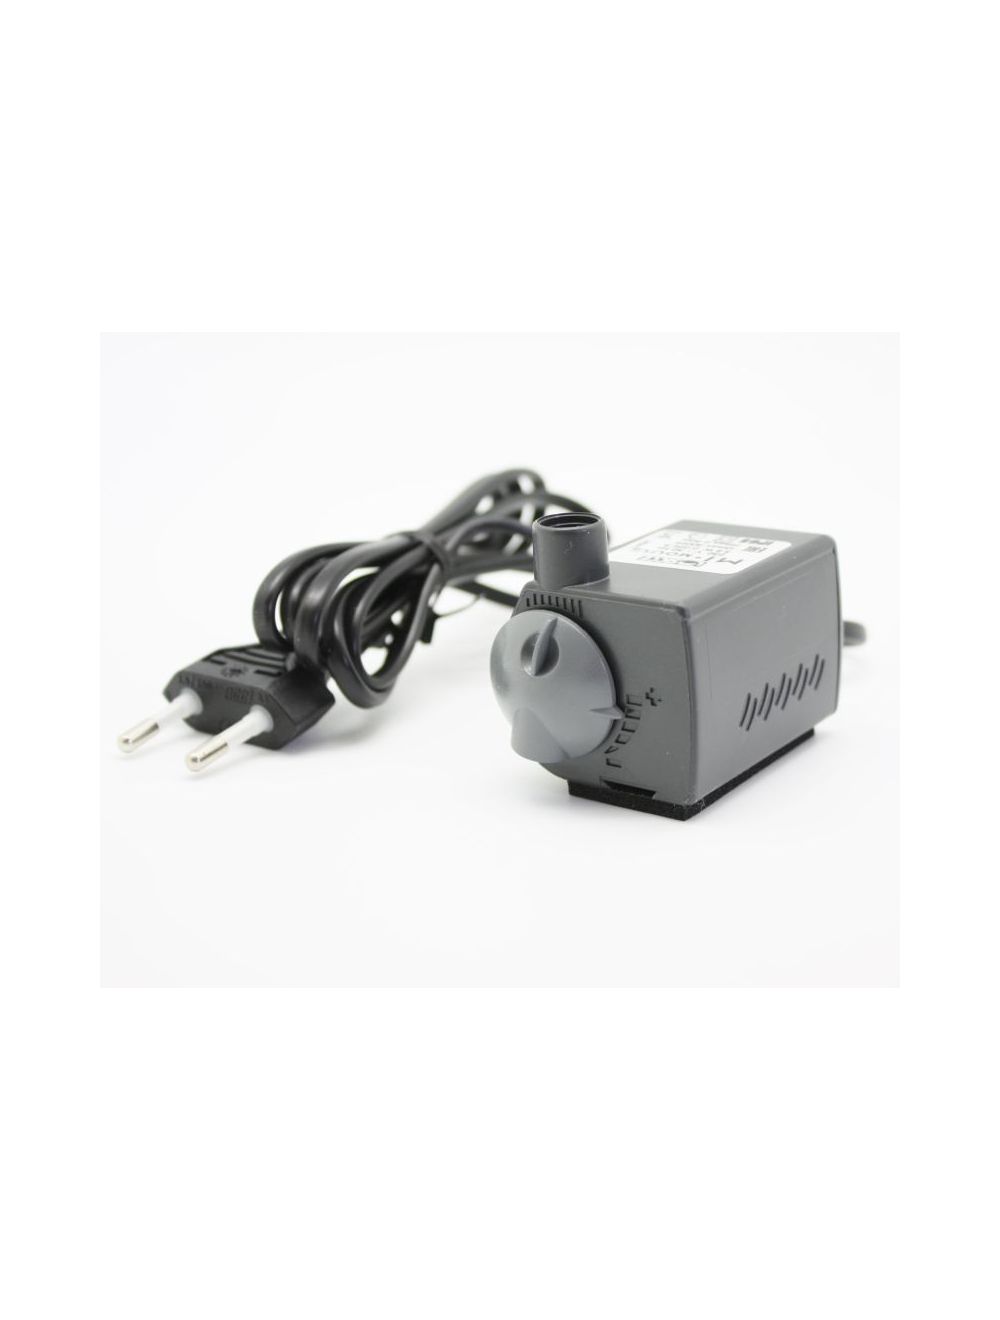 Sicce Pumpe - Mi-Mouse - 1,5m Kabel - 2-polig - 0,5m Förderhöhe